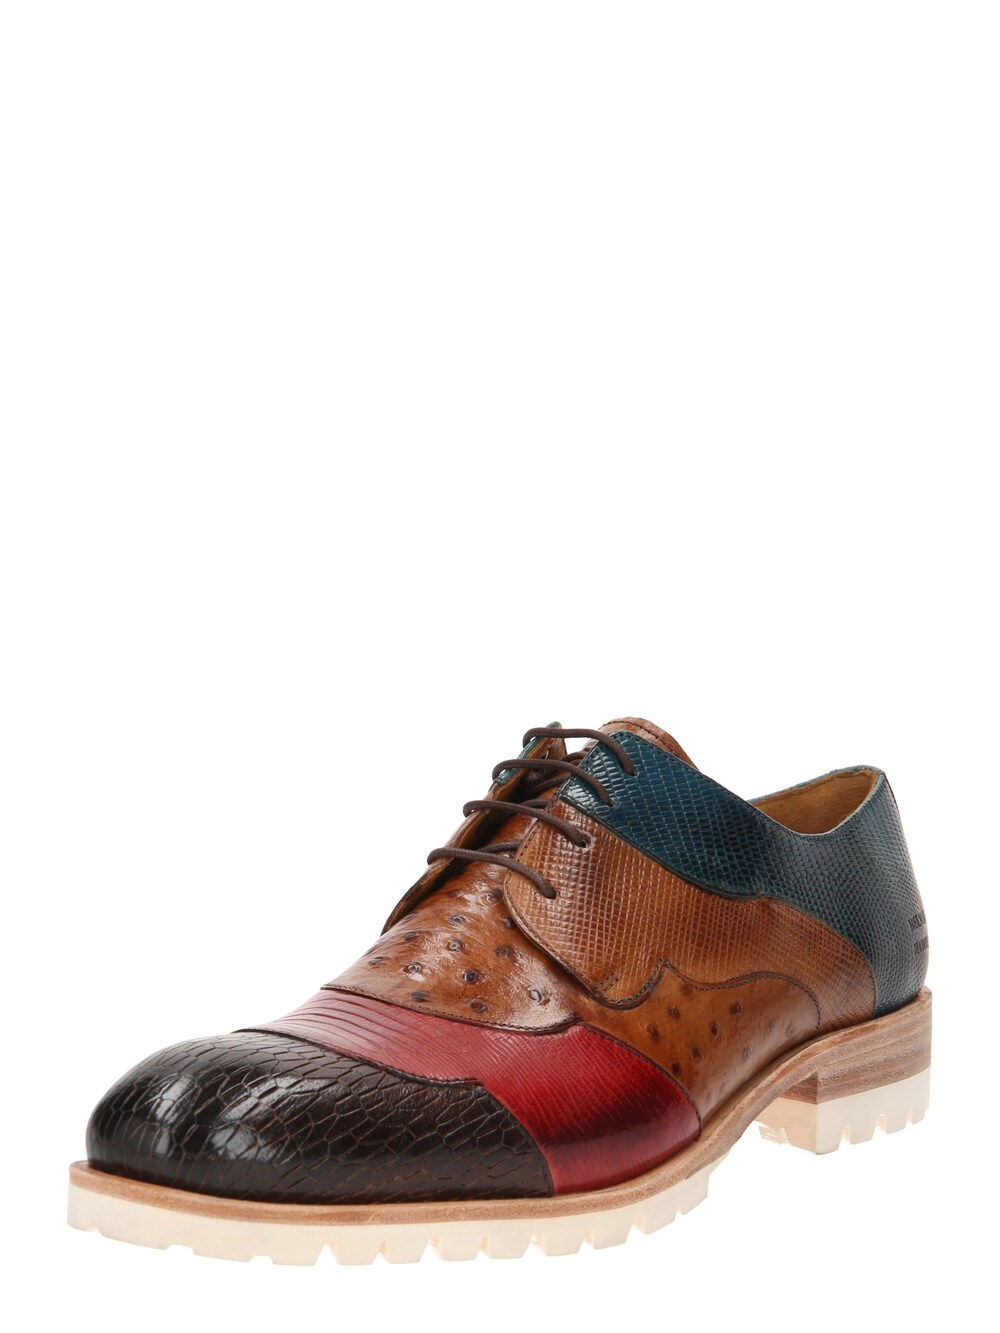 Обувь на шнуровке MELVIN & HAMILTON Patrick, смешанные цвета hamilton patrick craven house